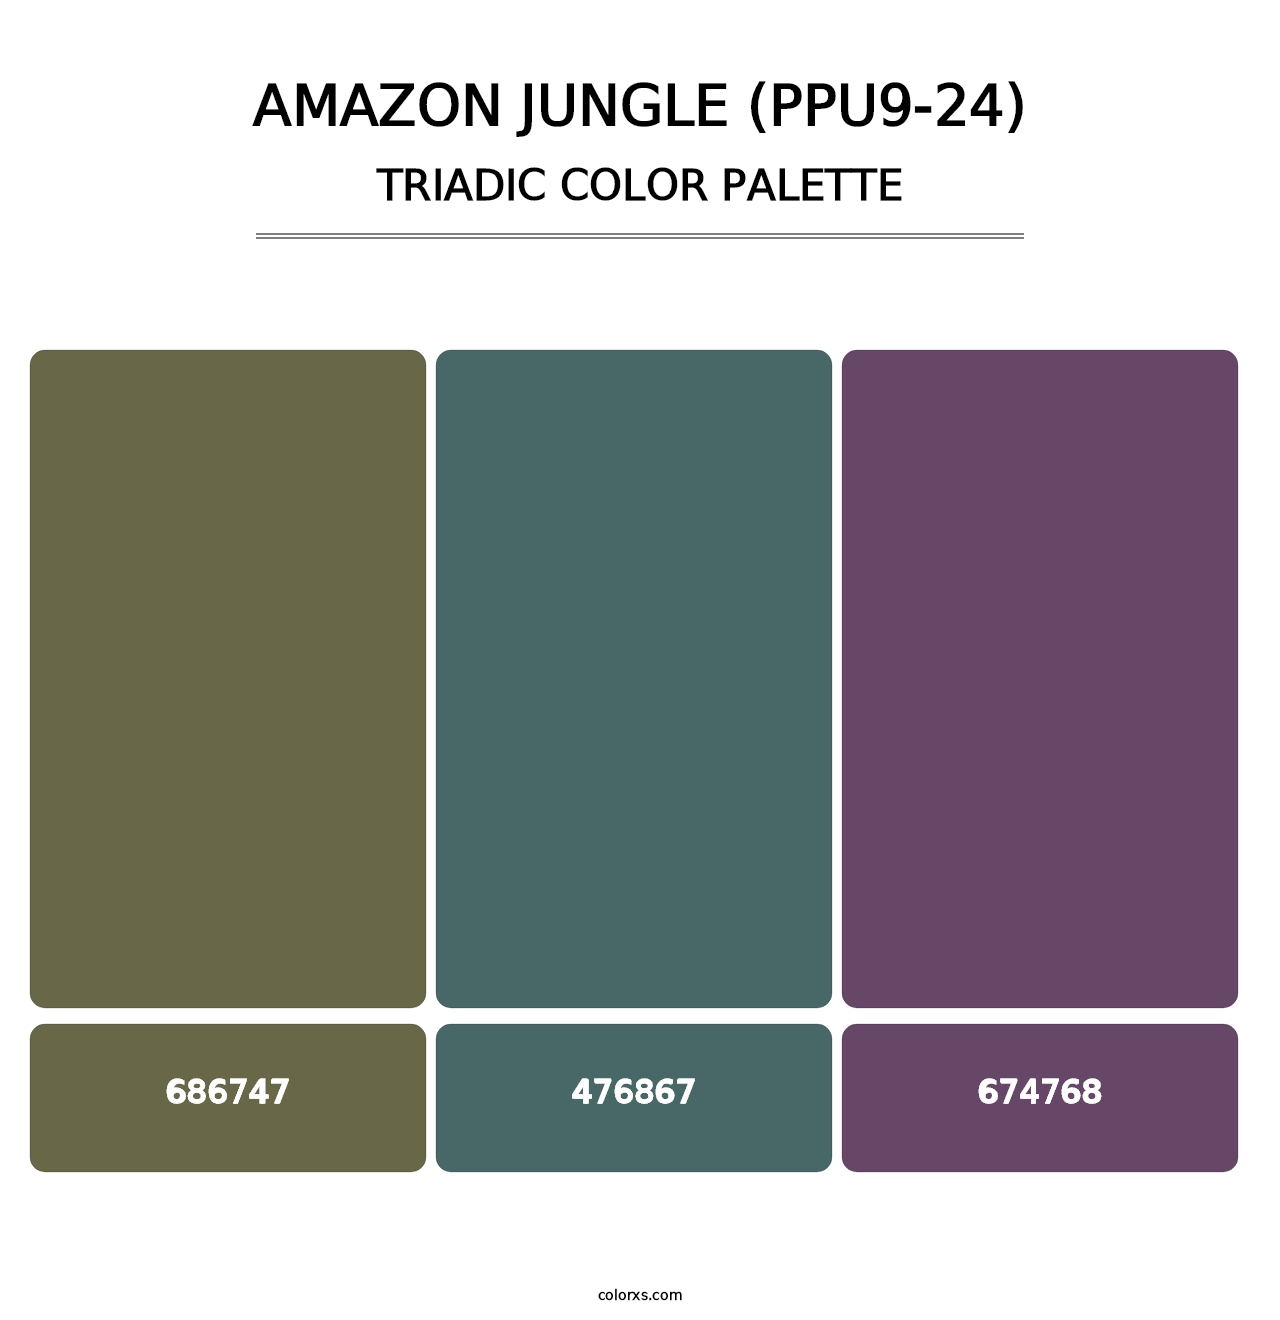 Amazon Jungle (PPU9-24) - Triadic Color Palette